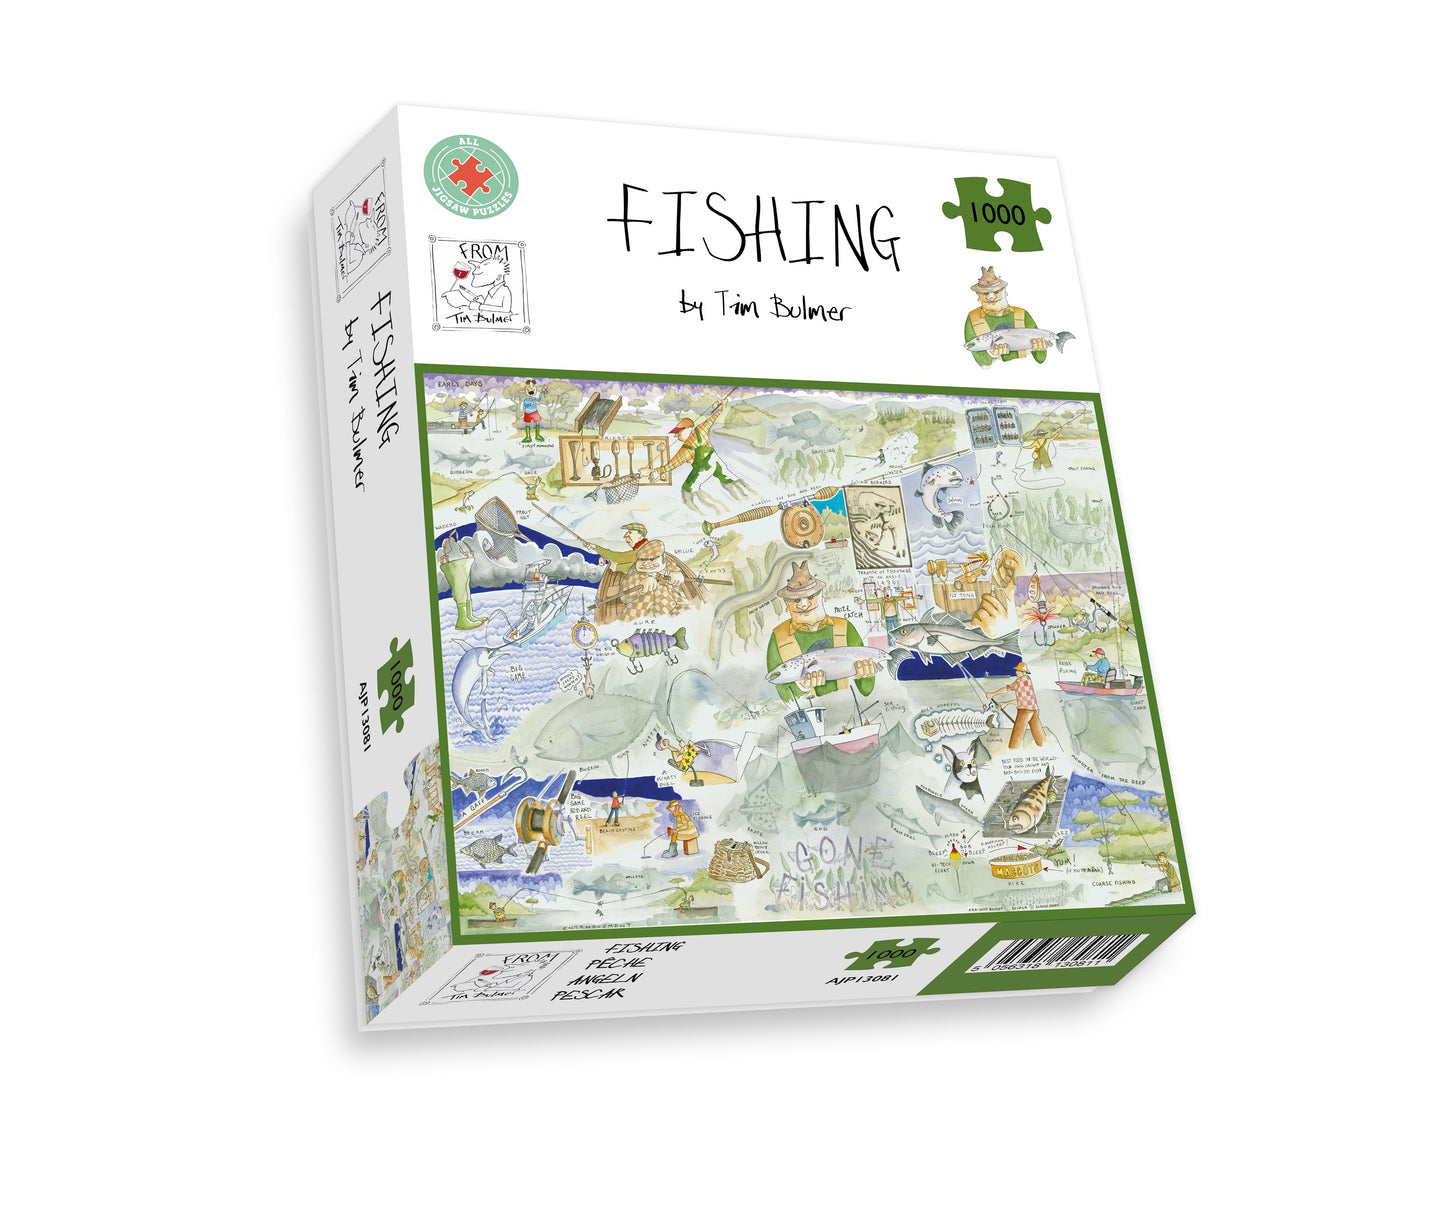 Fishing - Tim Bulmer 1000 Piece Jigsaw Puzzle